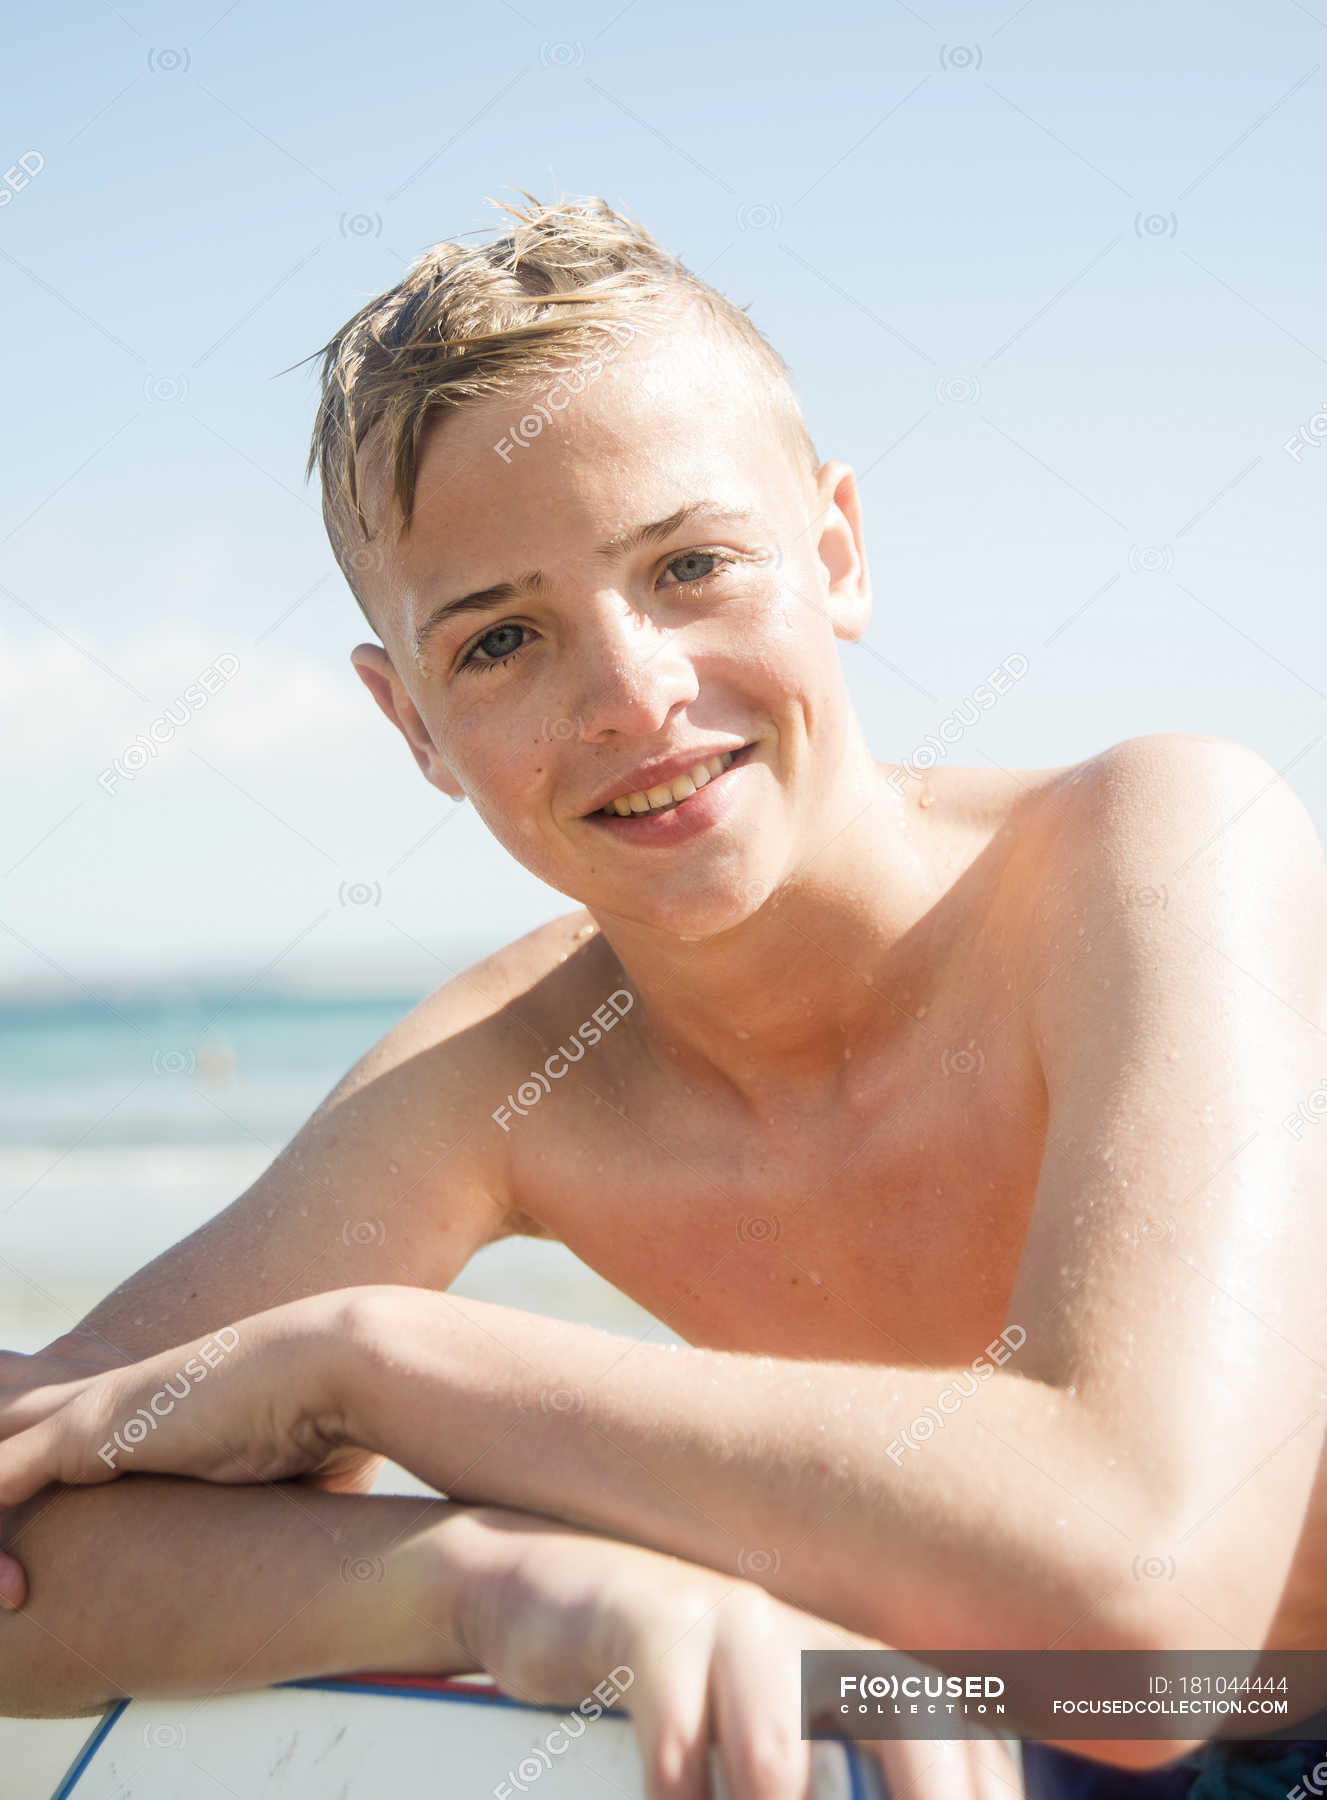 focused_181044444-stock-photo-portrait-smiling-teenage-boy-beach.jpg